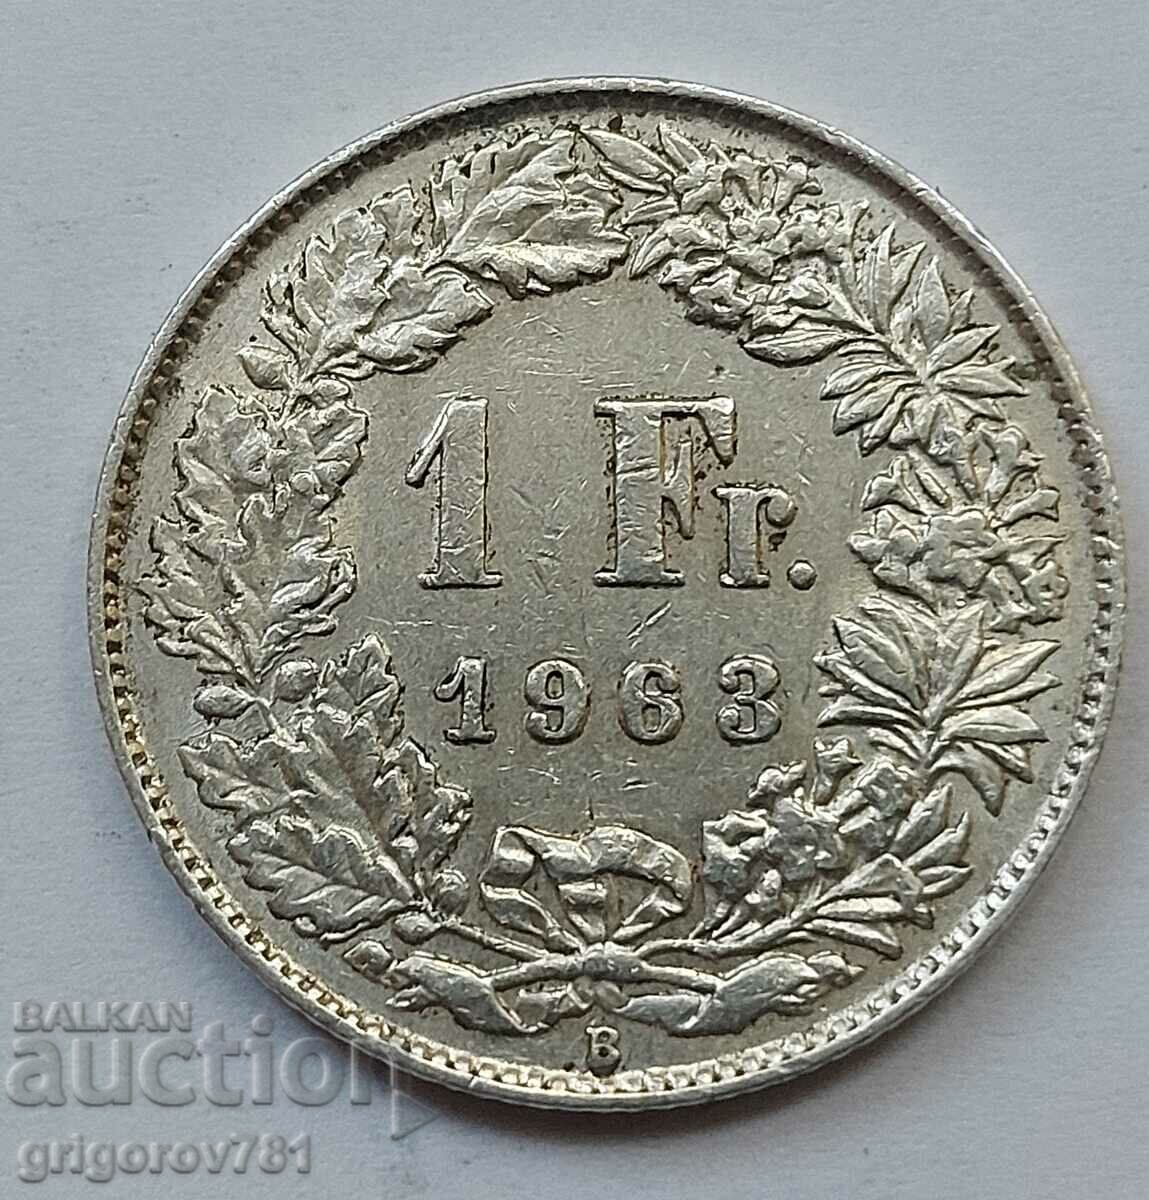 1 Franc Silver Switzerland 1963 B - Silver Coin #11